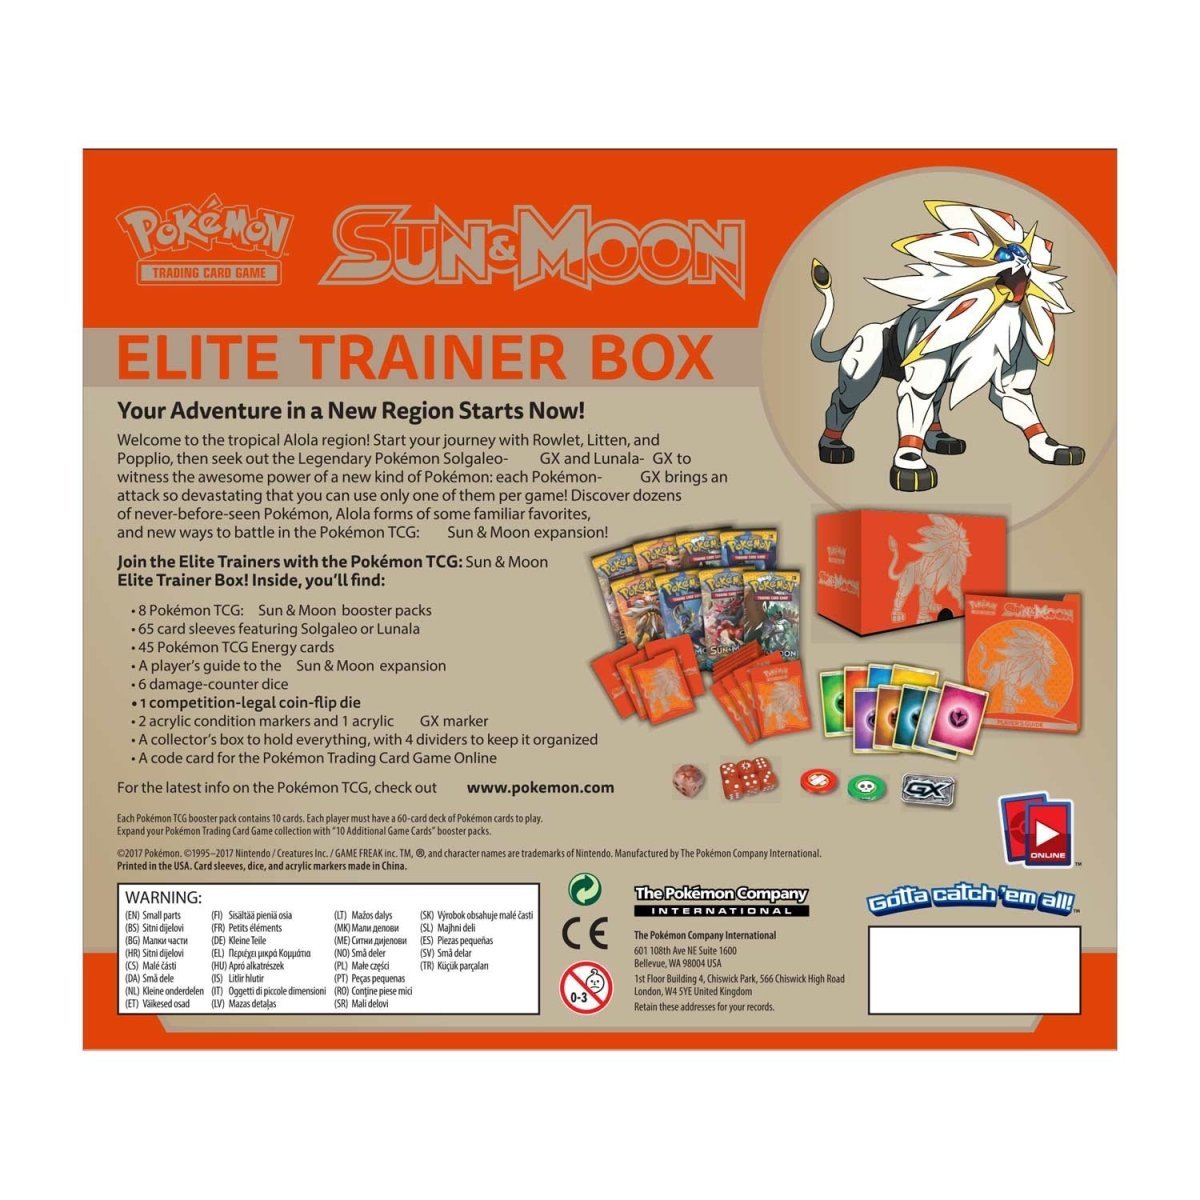 Pokémon Sun & Moon Elite Trainer Box - Solgaleo - PokeRvm